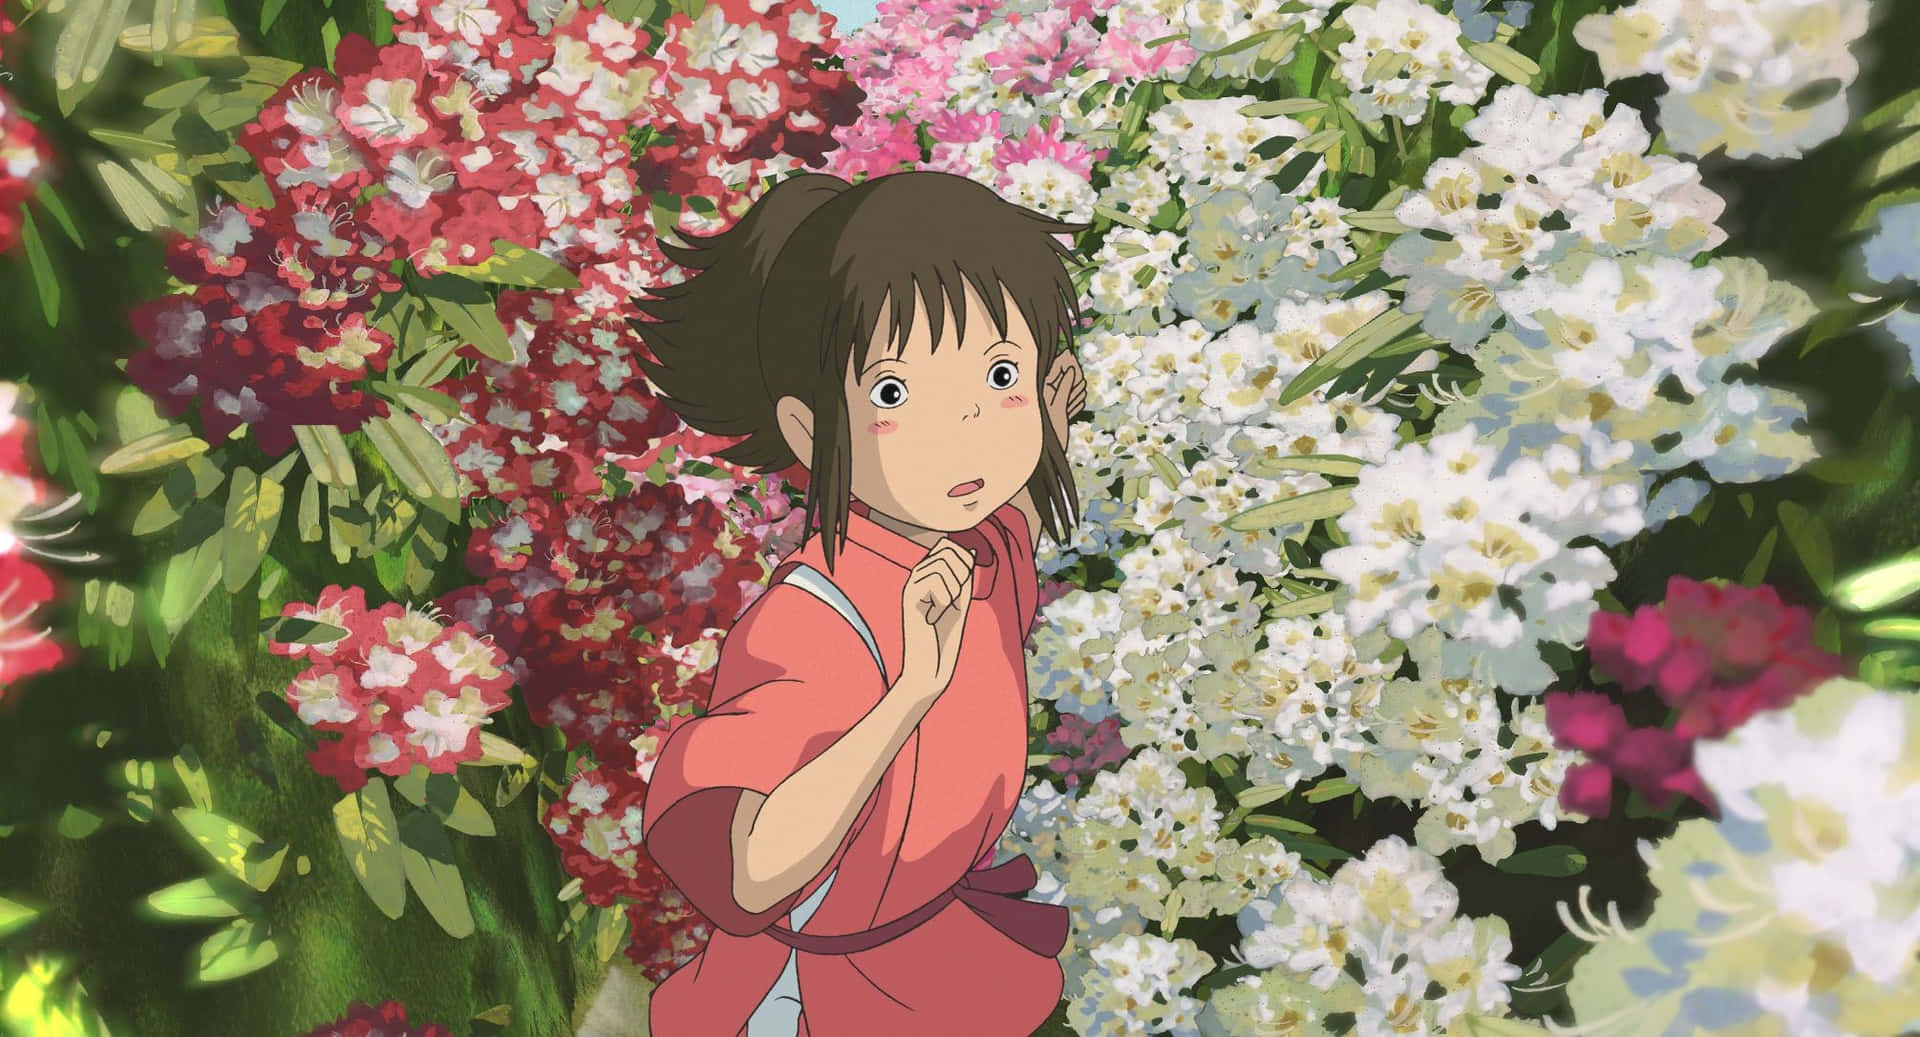 Ghibli Girl Among Flowers Wallpaper